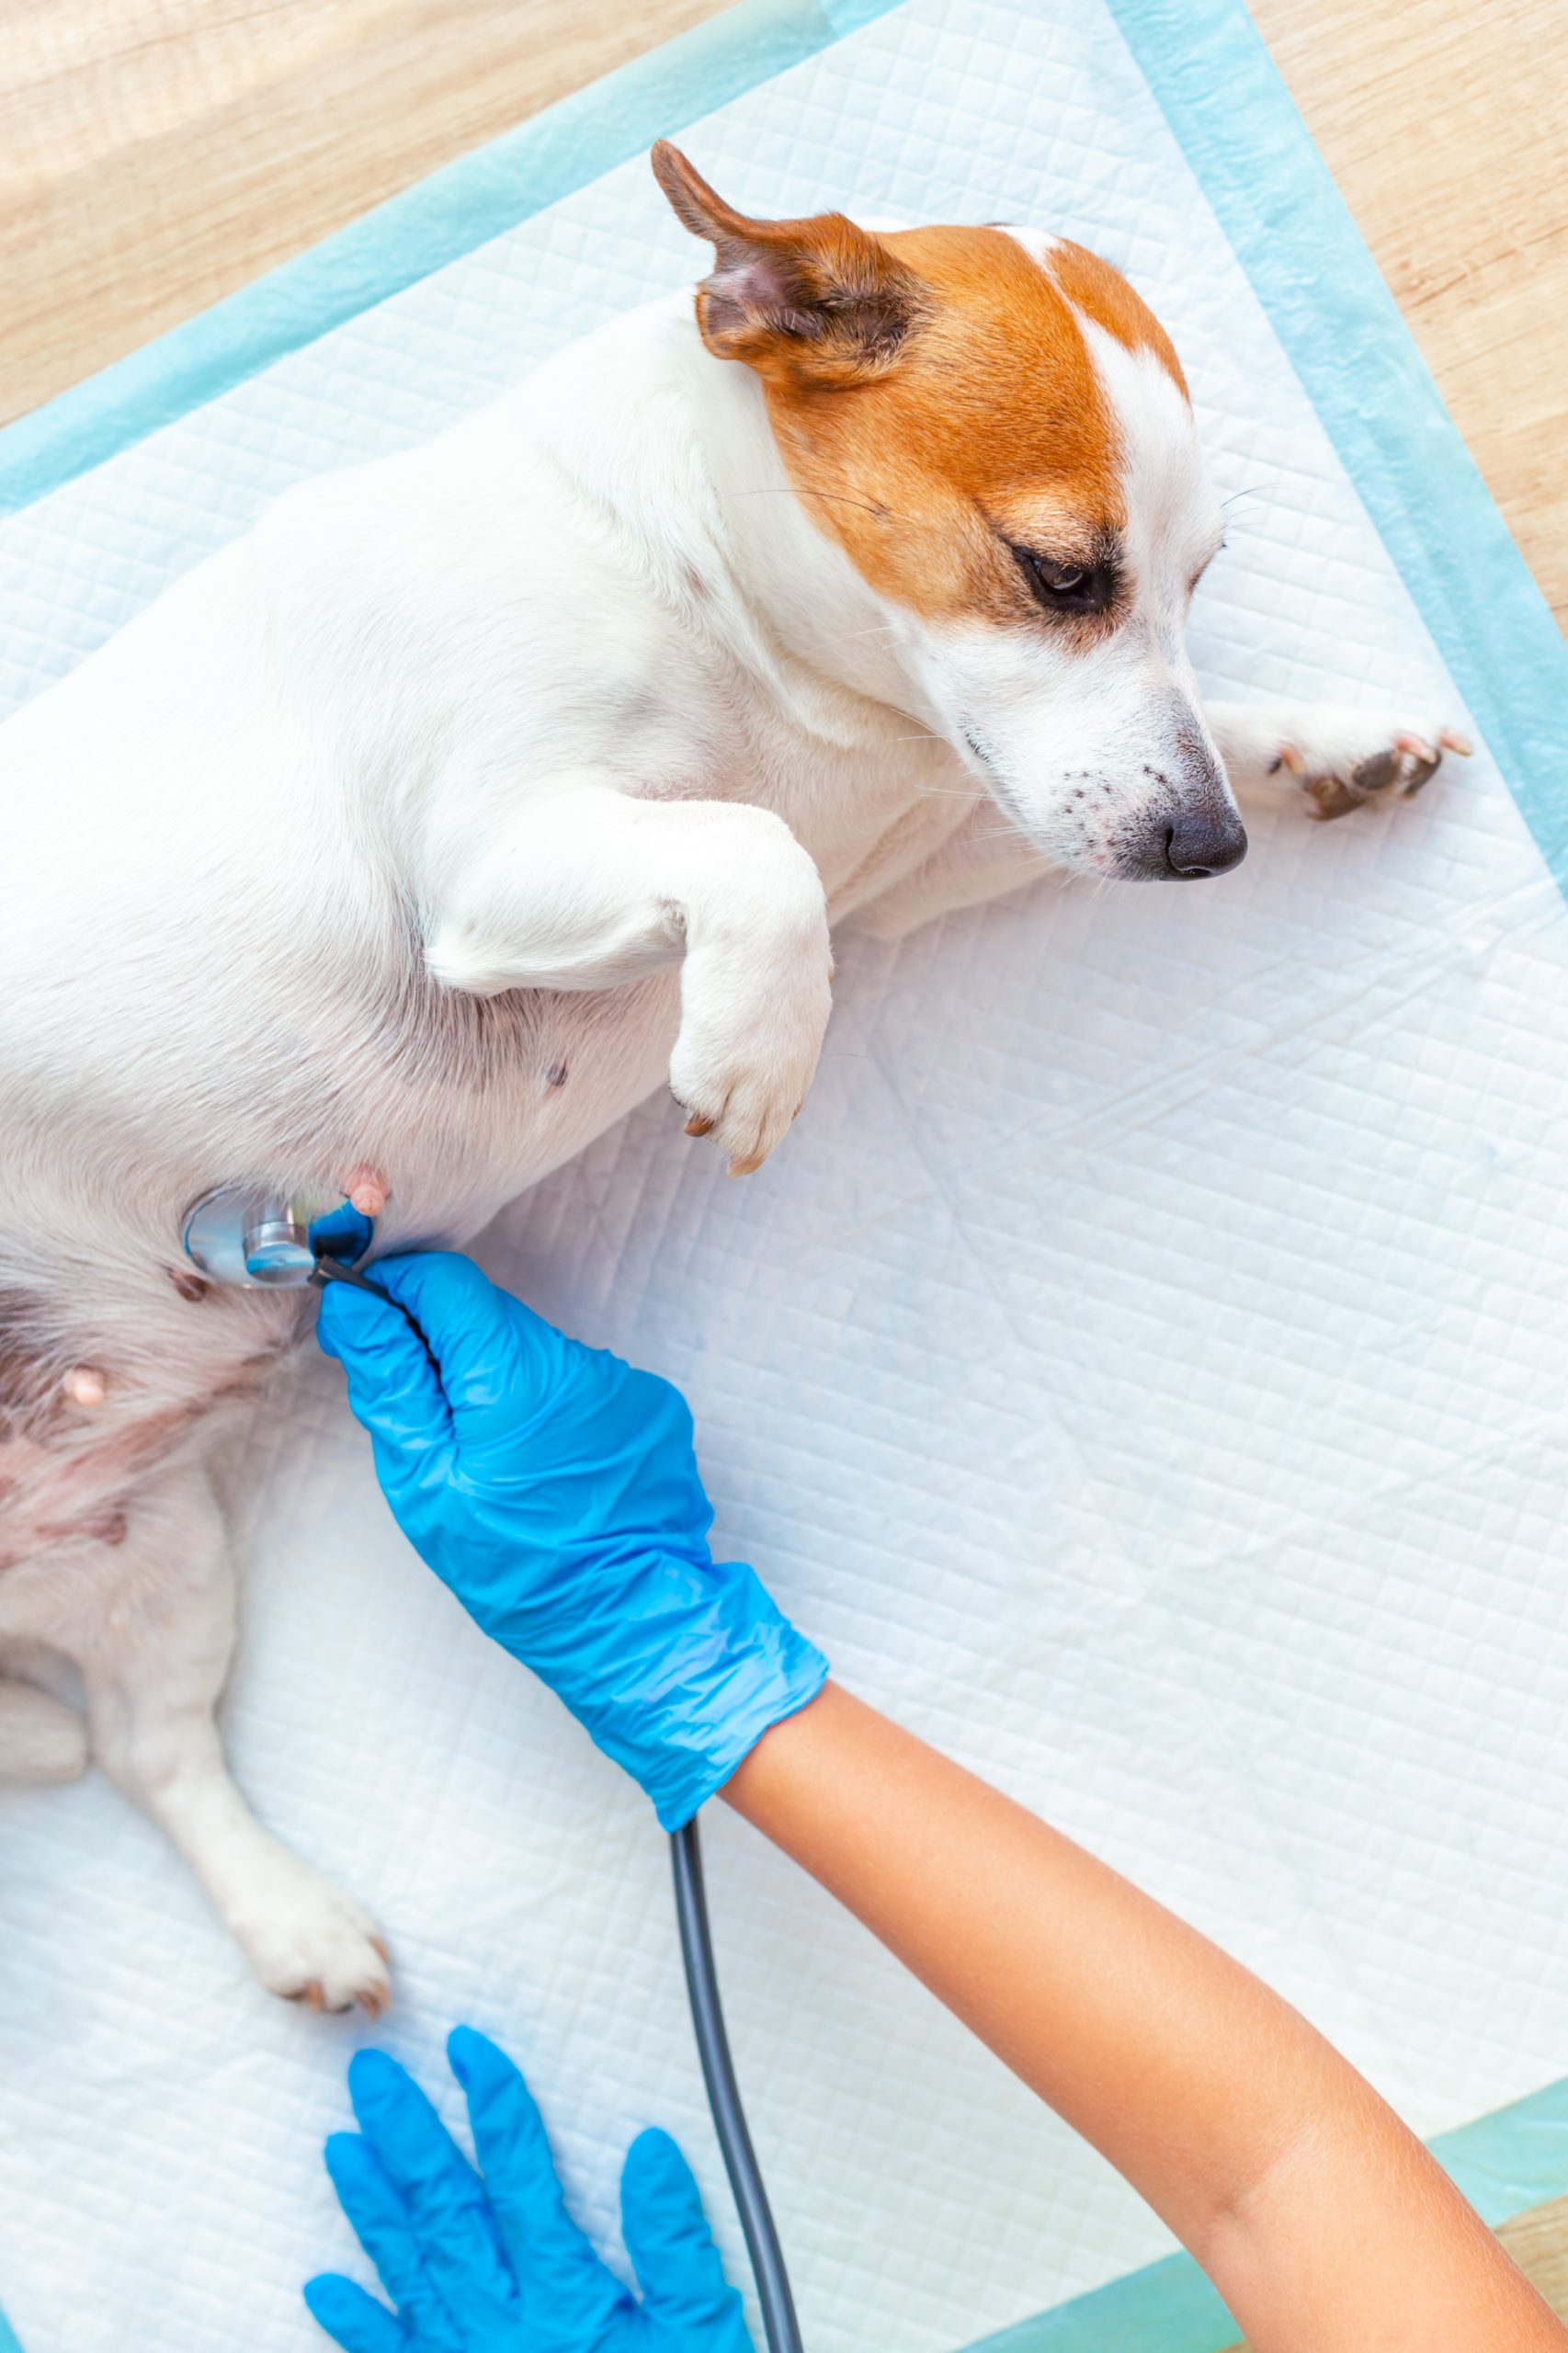 hundekrankenversicherung hundeversicherung tierkrankenversicherung tierversicherung krankenversicherung hund